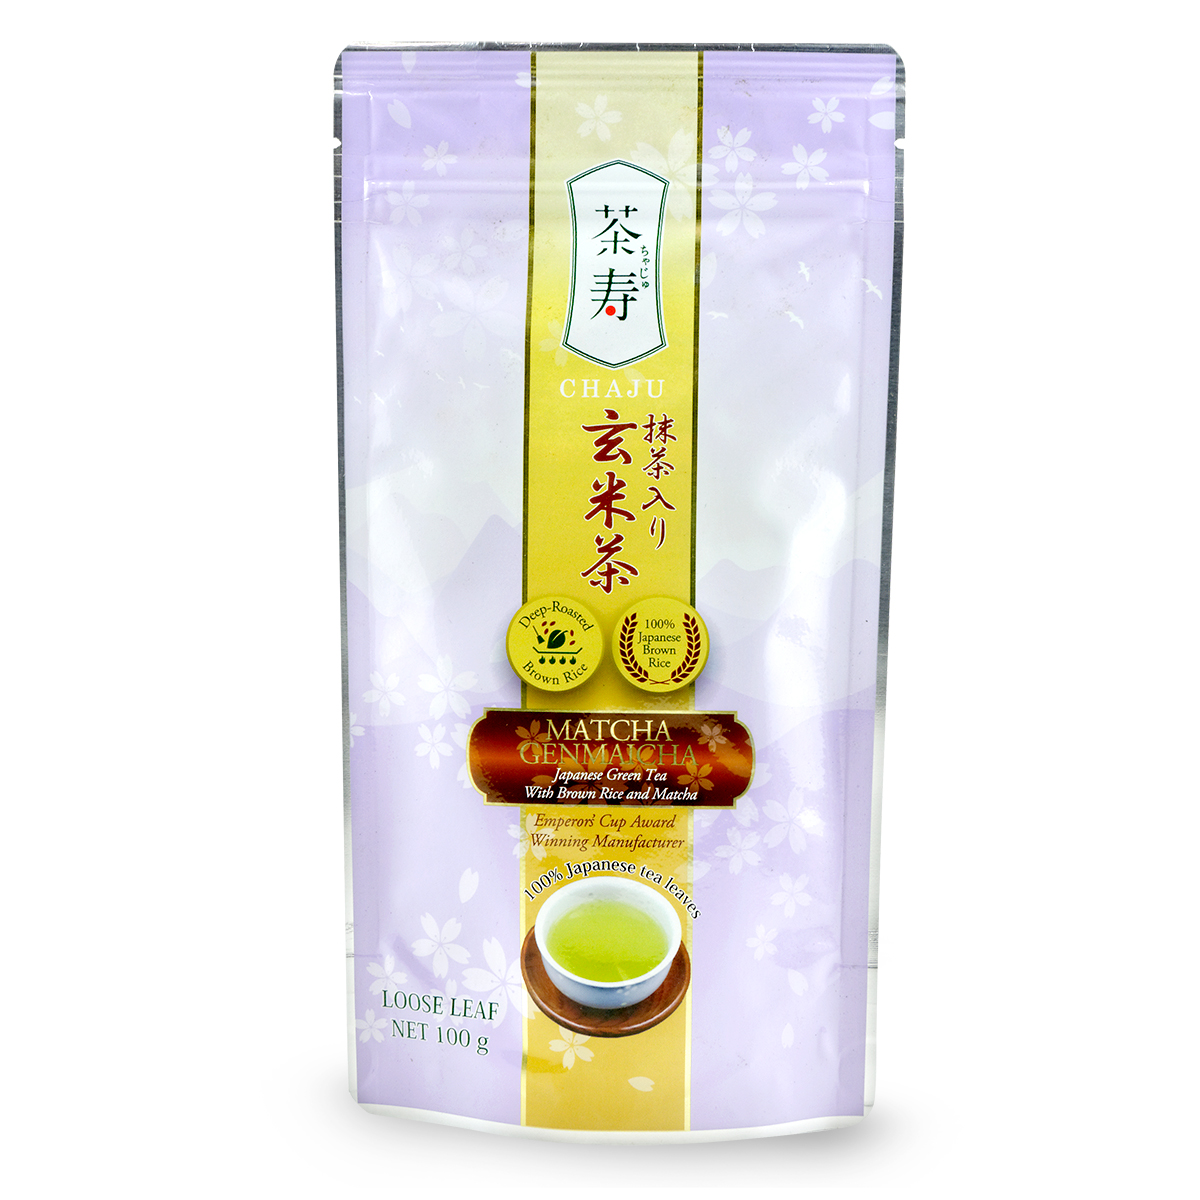 Ceai, cafea, bauturi fara alcool - Ceai verde Matcha Genmaicha CHAJU 100g, asianfood.ro